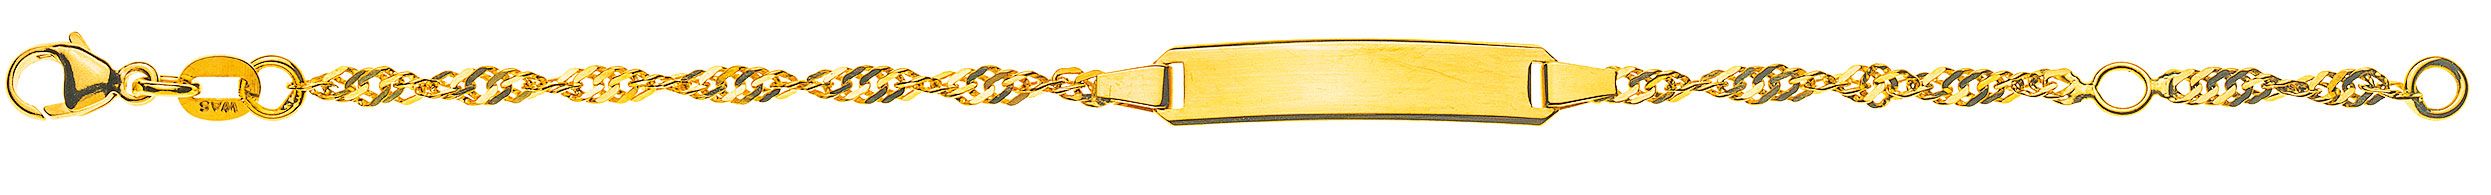 AURONOS Prestige ID bracelet 18k yellow gold Singapore chain 14cm